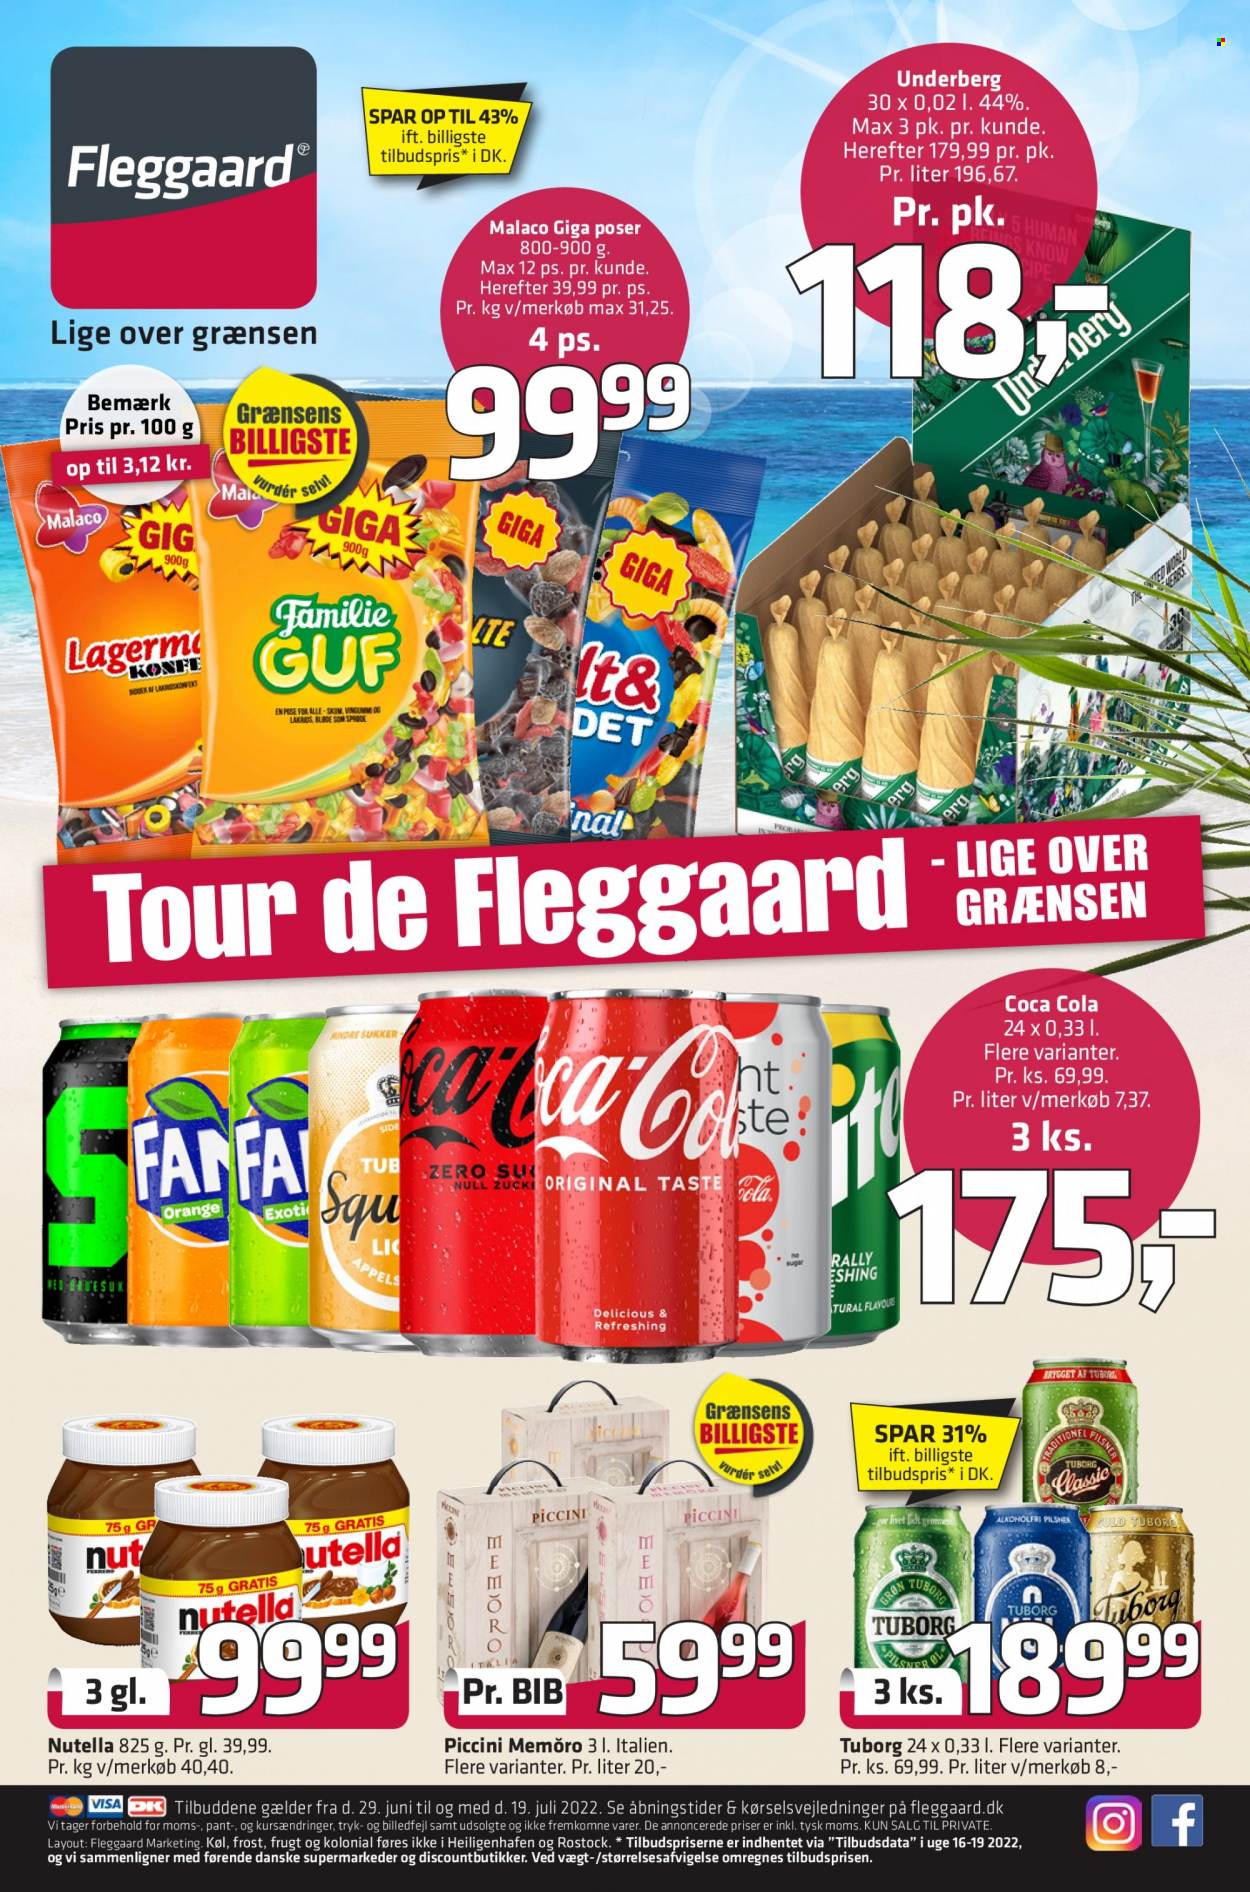 thumbnail - Fleggaard tilbud  - 29.6.2022 - 19.7.2022 - tilbudsprodukter - Tuborg, Malaco, Nutella, Coca-Cola. Side 1.